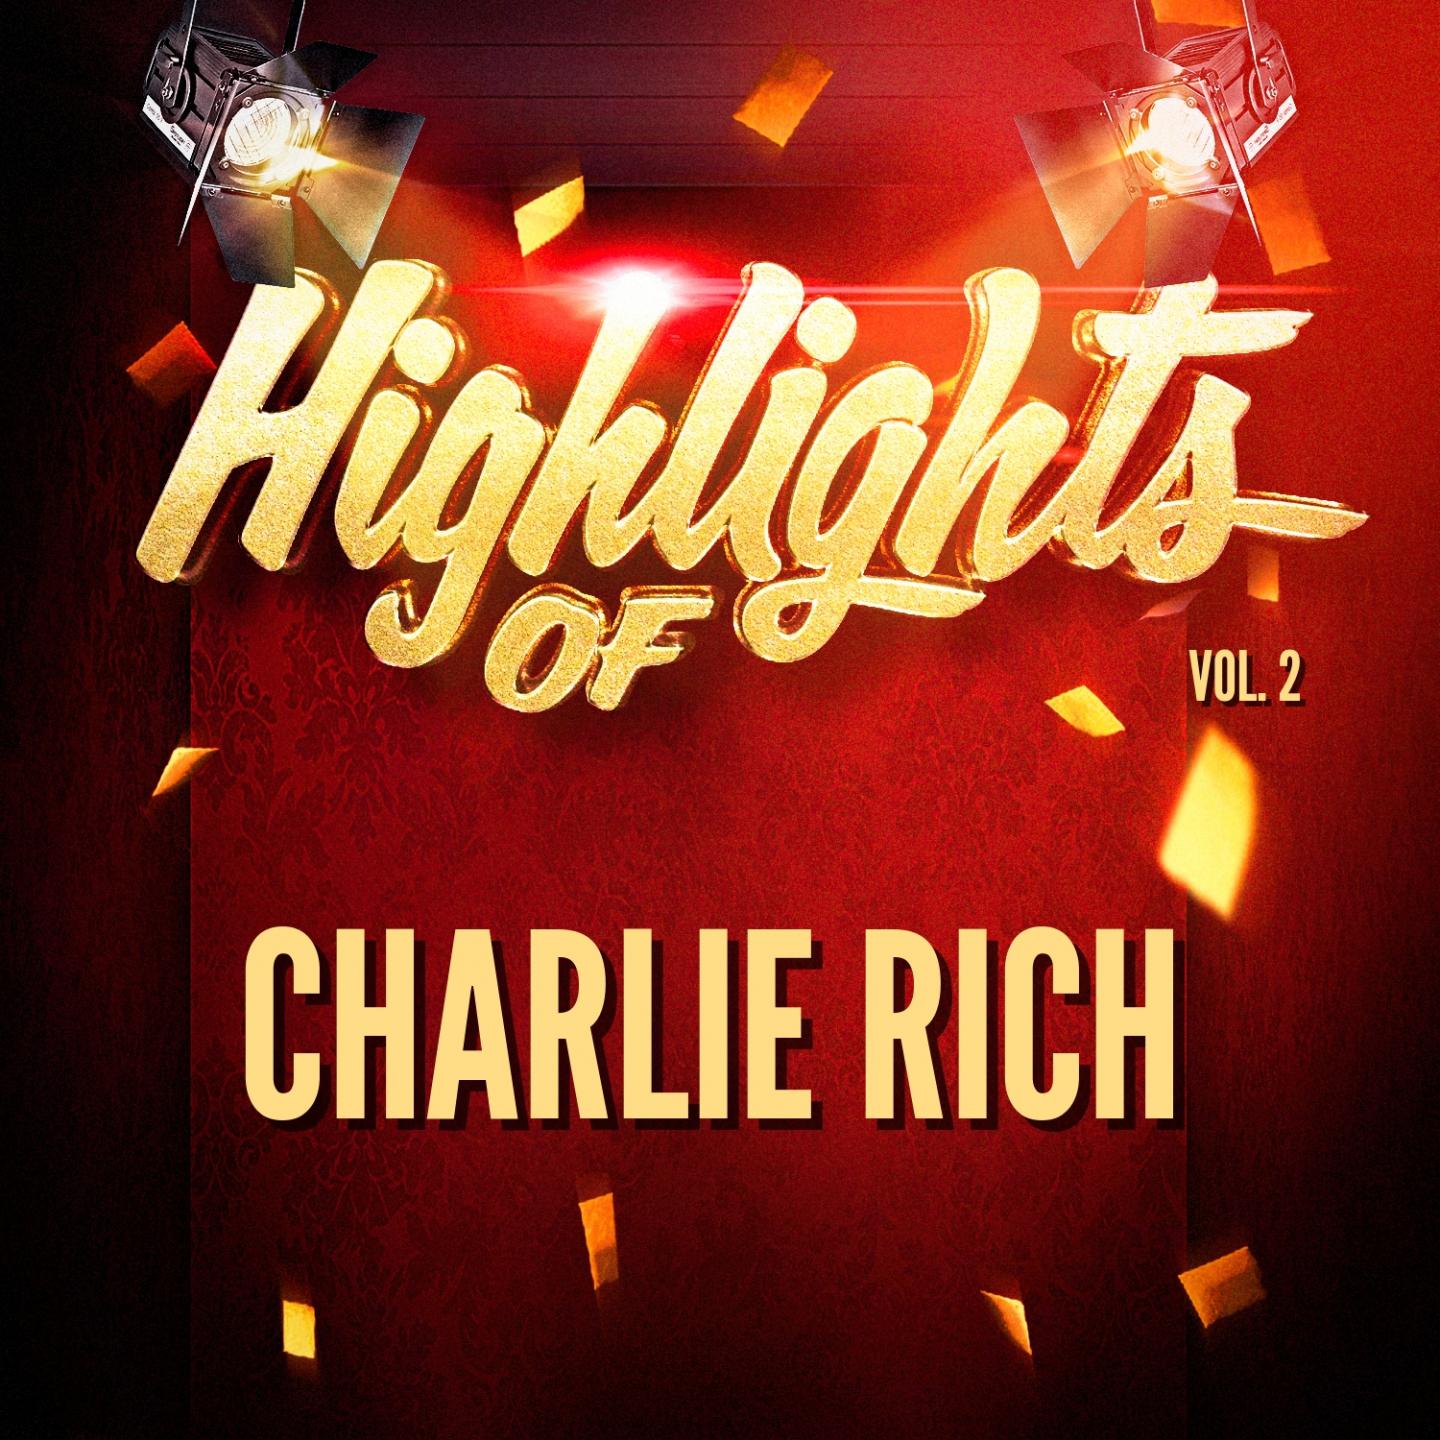 Highlights of Charlie Rich, Vol. 2